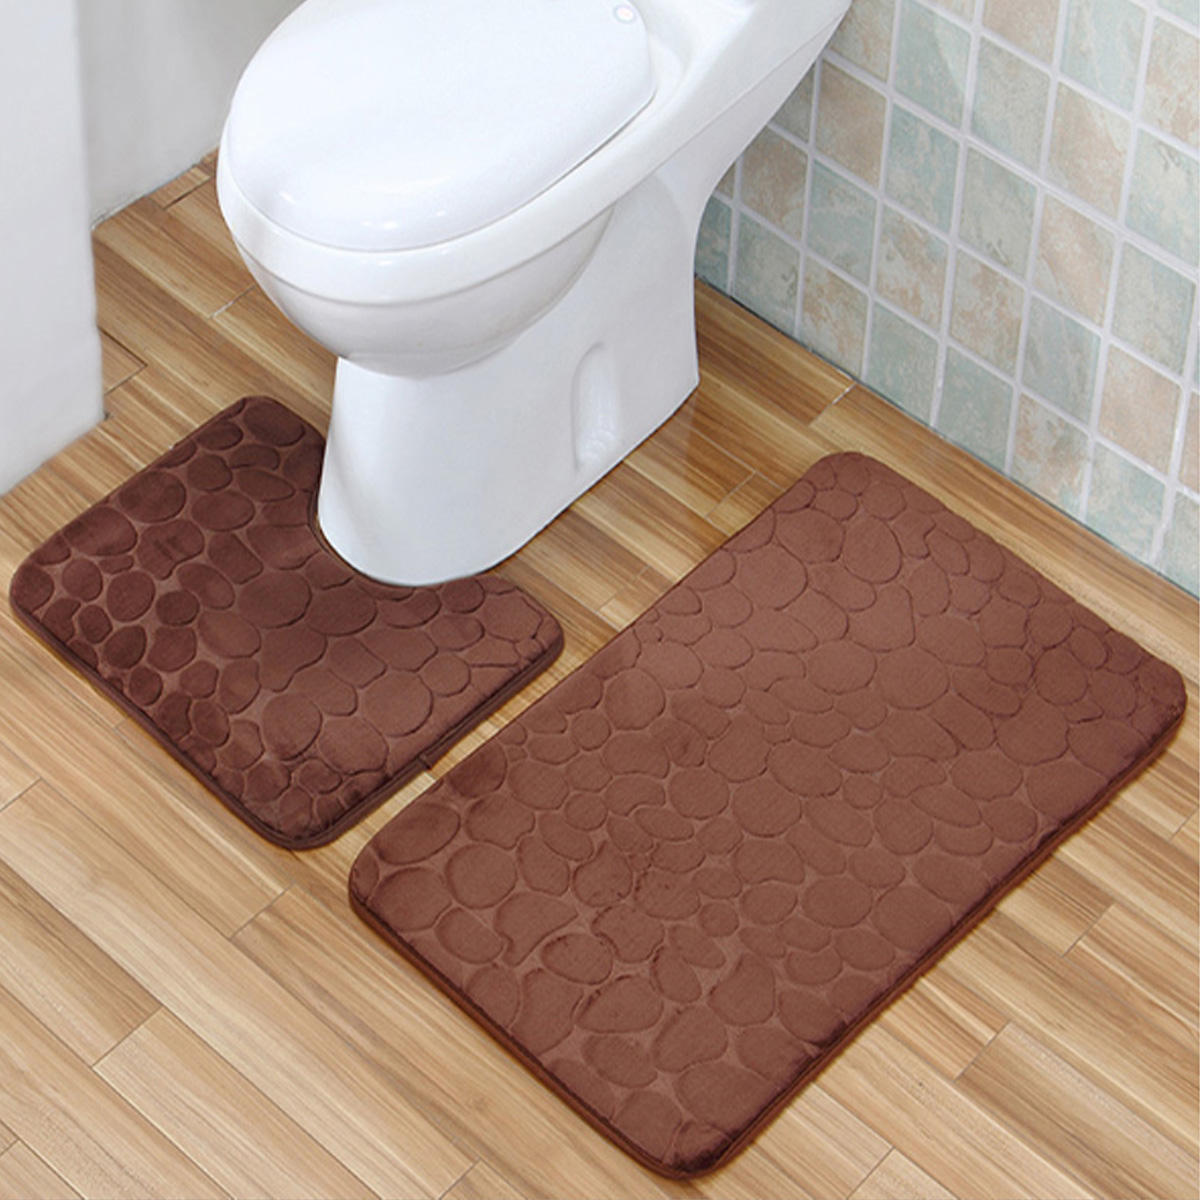 

2 PCS Non Slip Toilet Cover Rugs Bath Mat Set Bath Shower Bathroom Floor Carpet